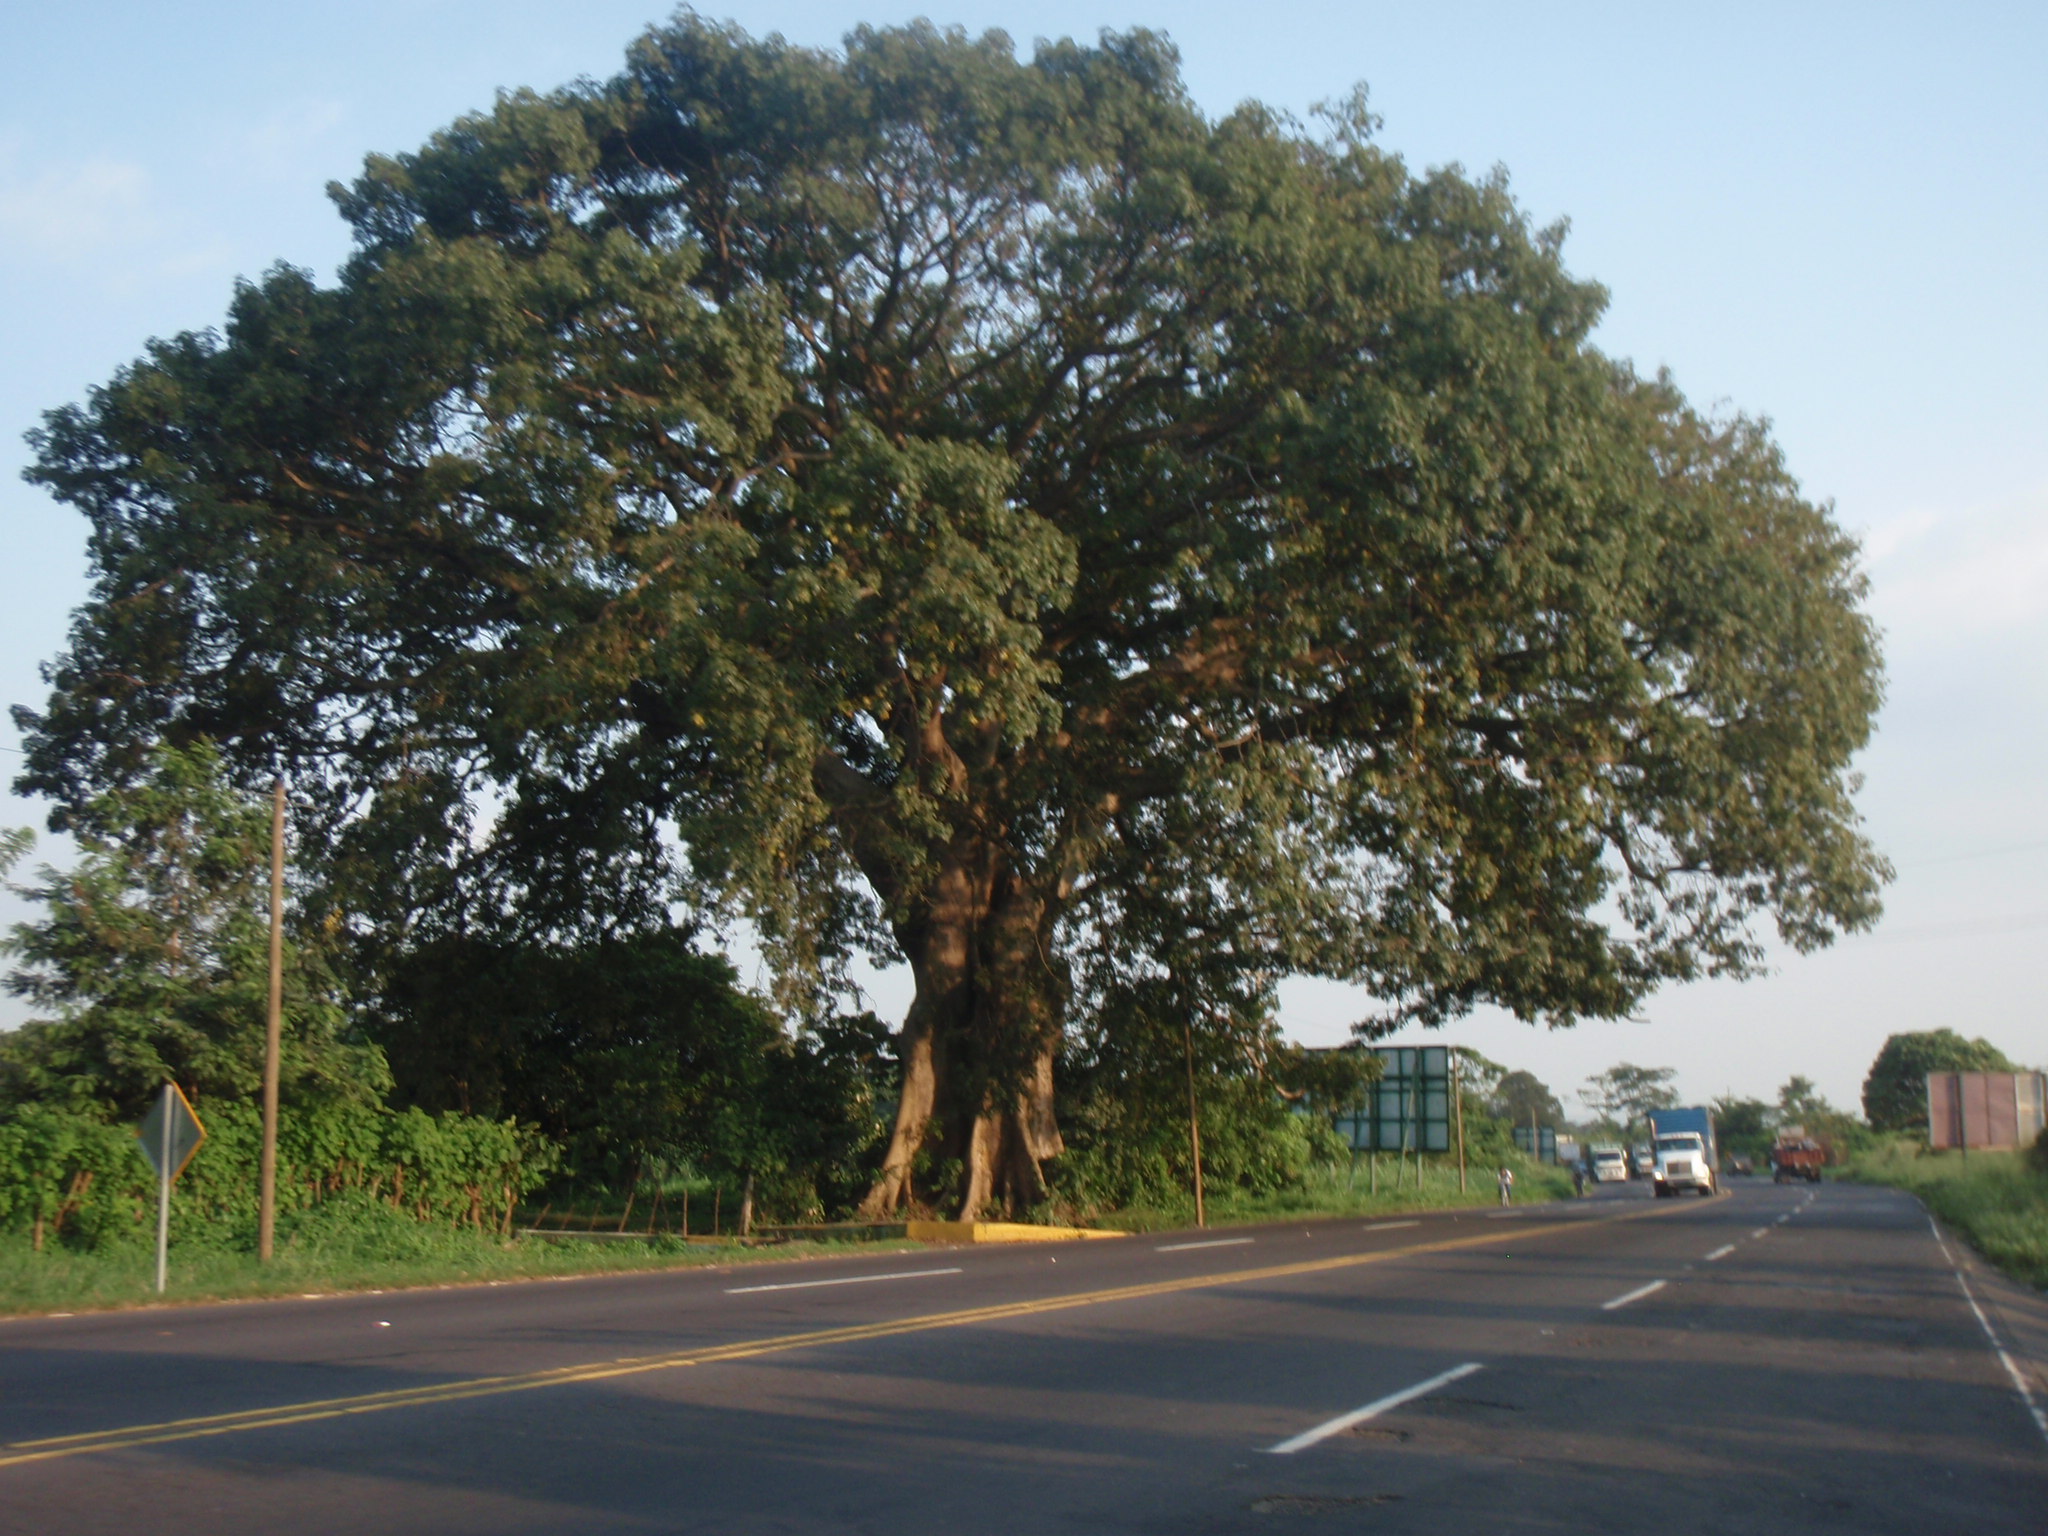 Huge tropical trees line the roads in Guatemala